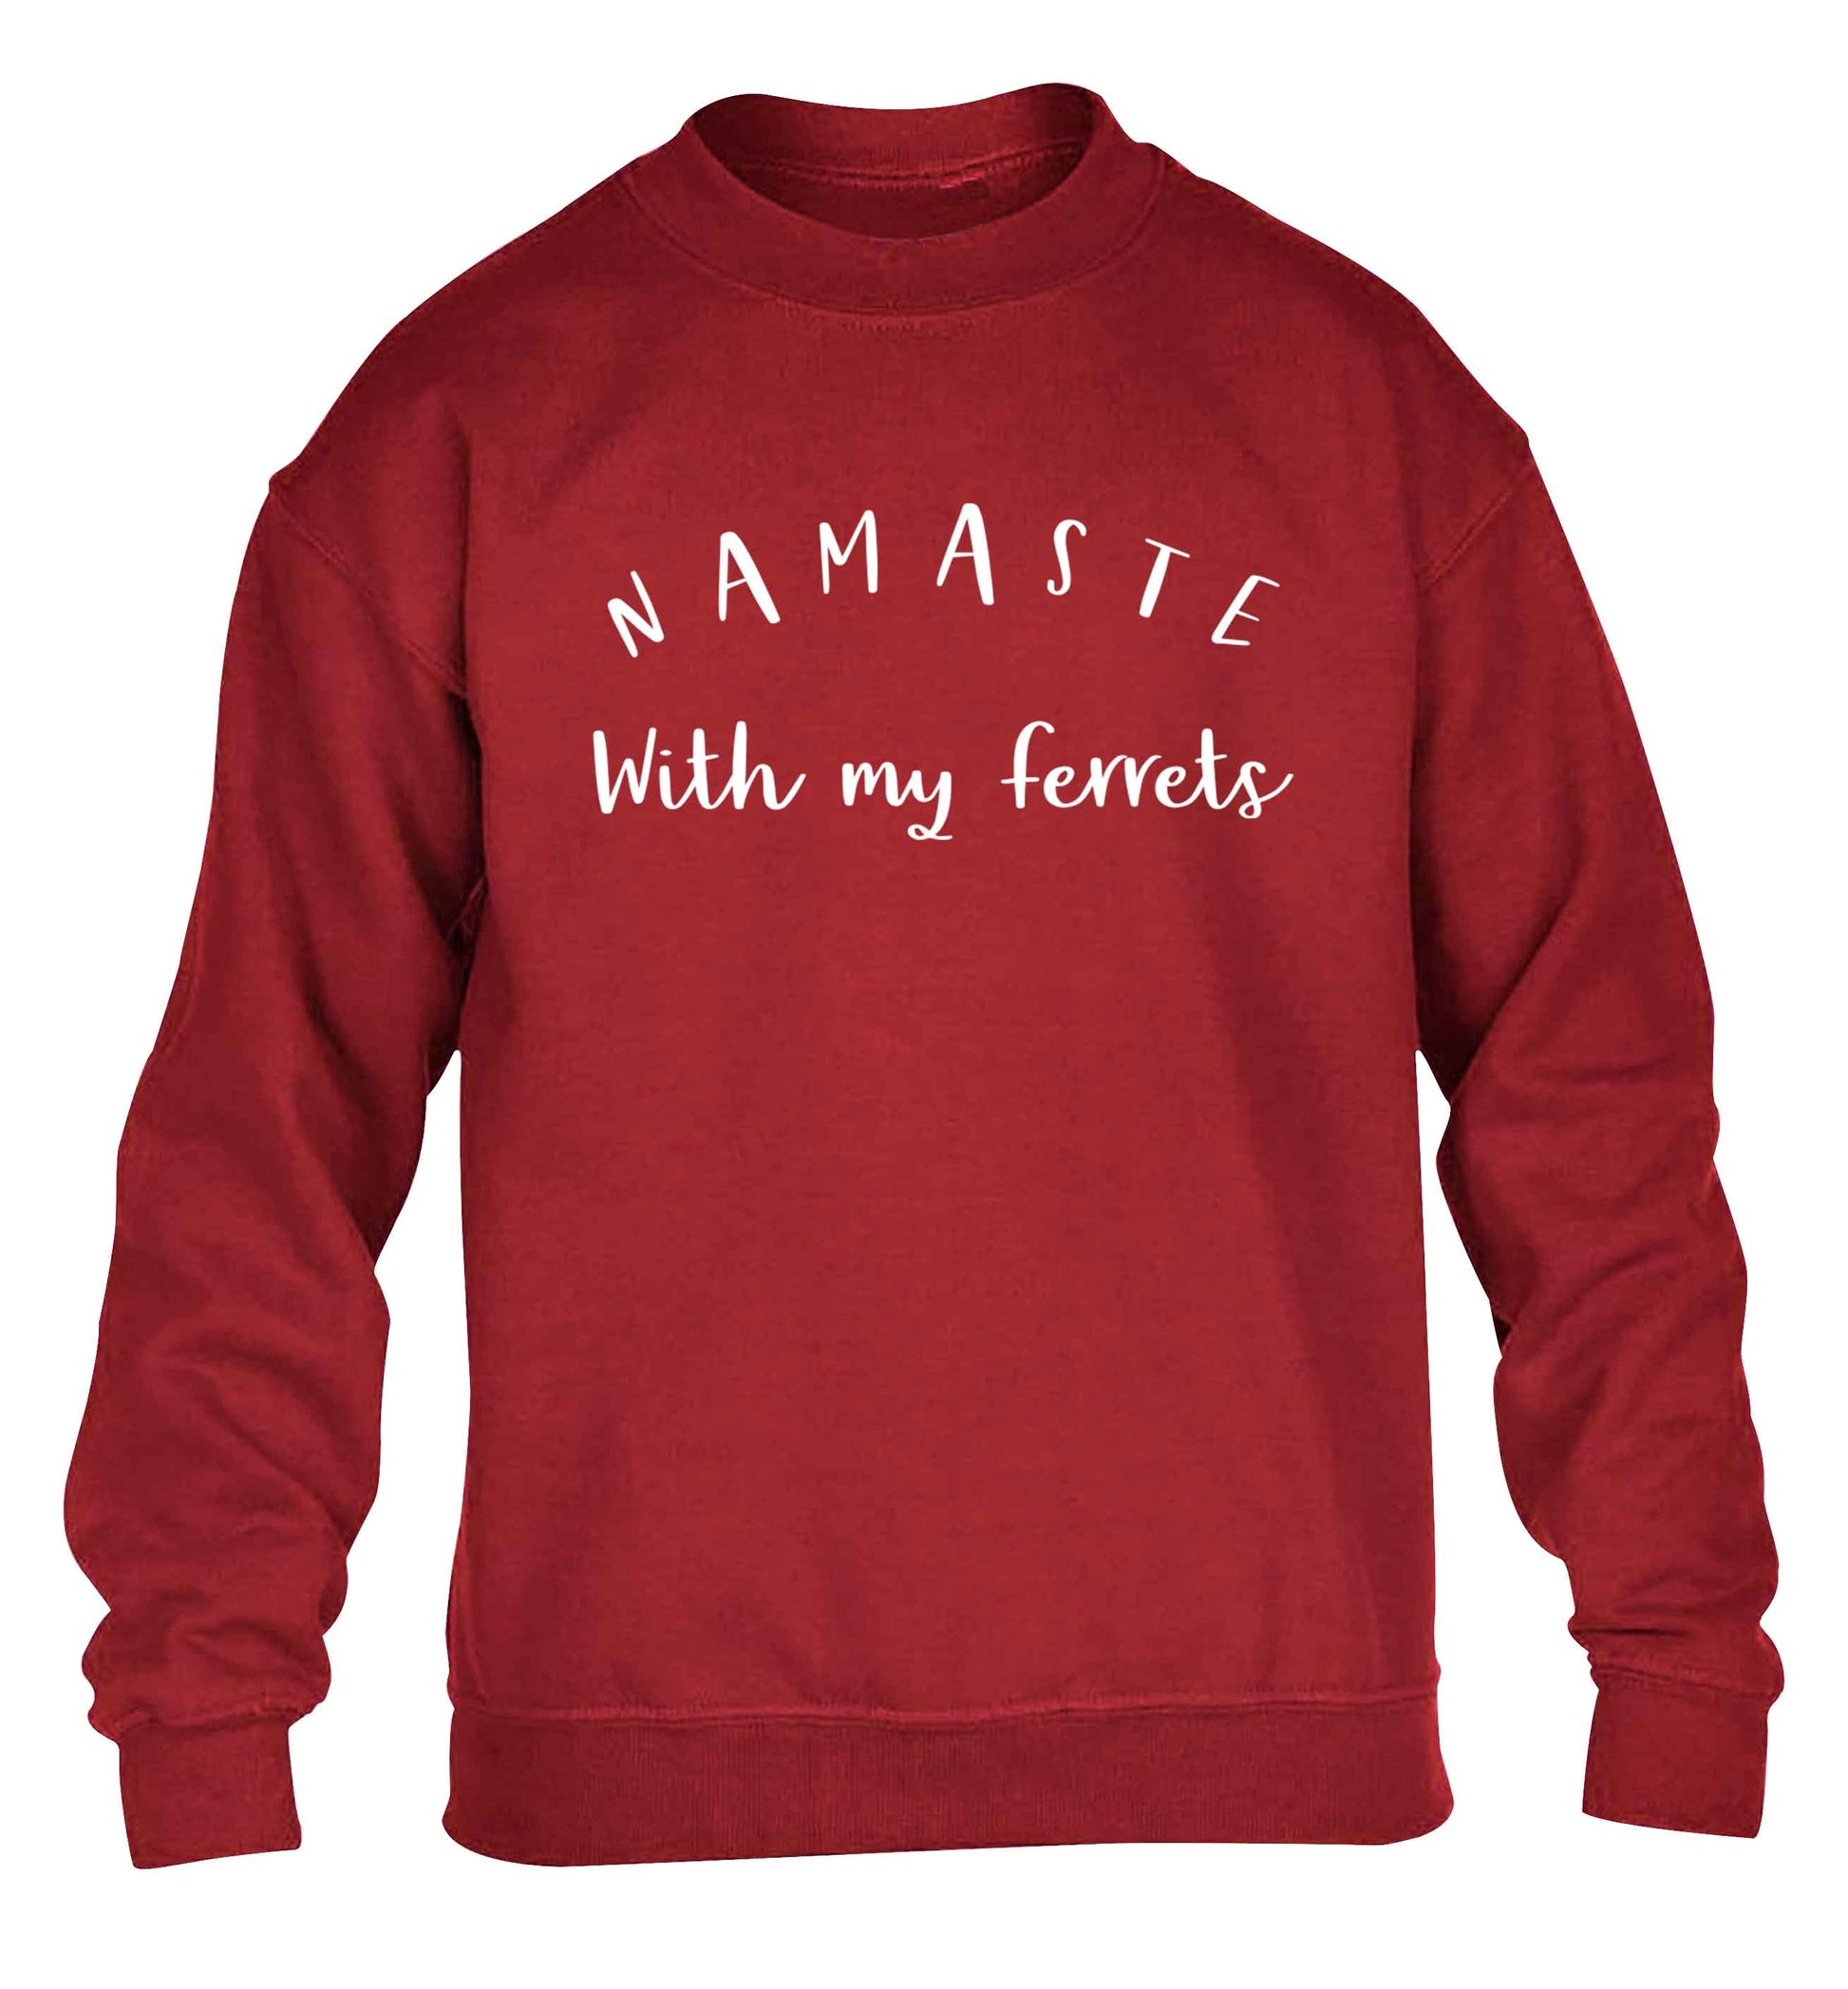 Namaste with my ferrets children's grey sweater 12-13 Years